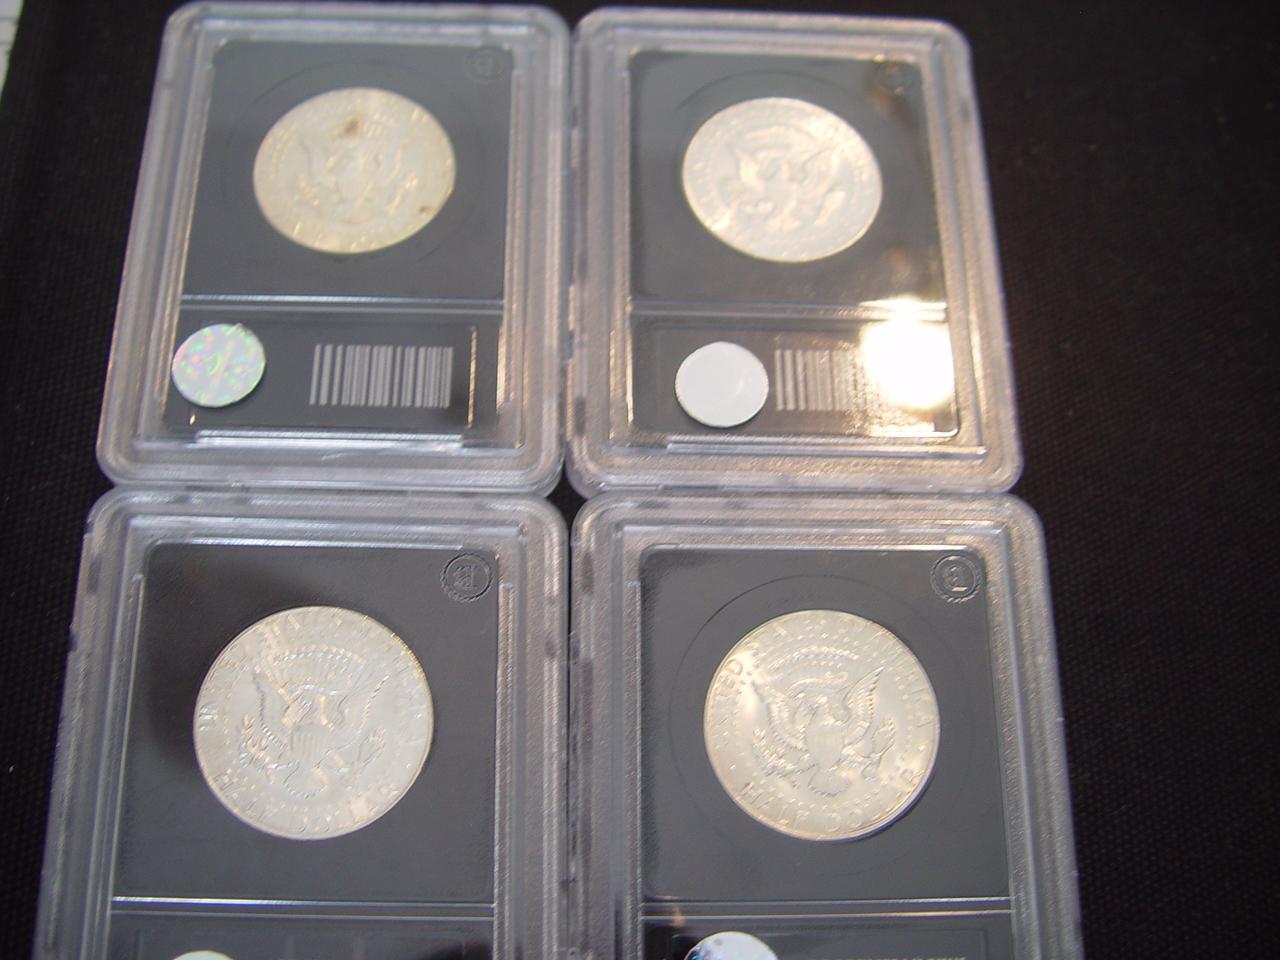 Four 50 Cent Kennedy's BU 1966, 1967, 1967 & 1968-D 40% Silver